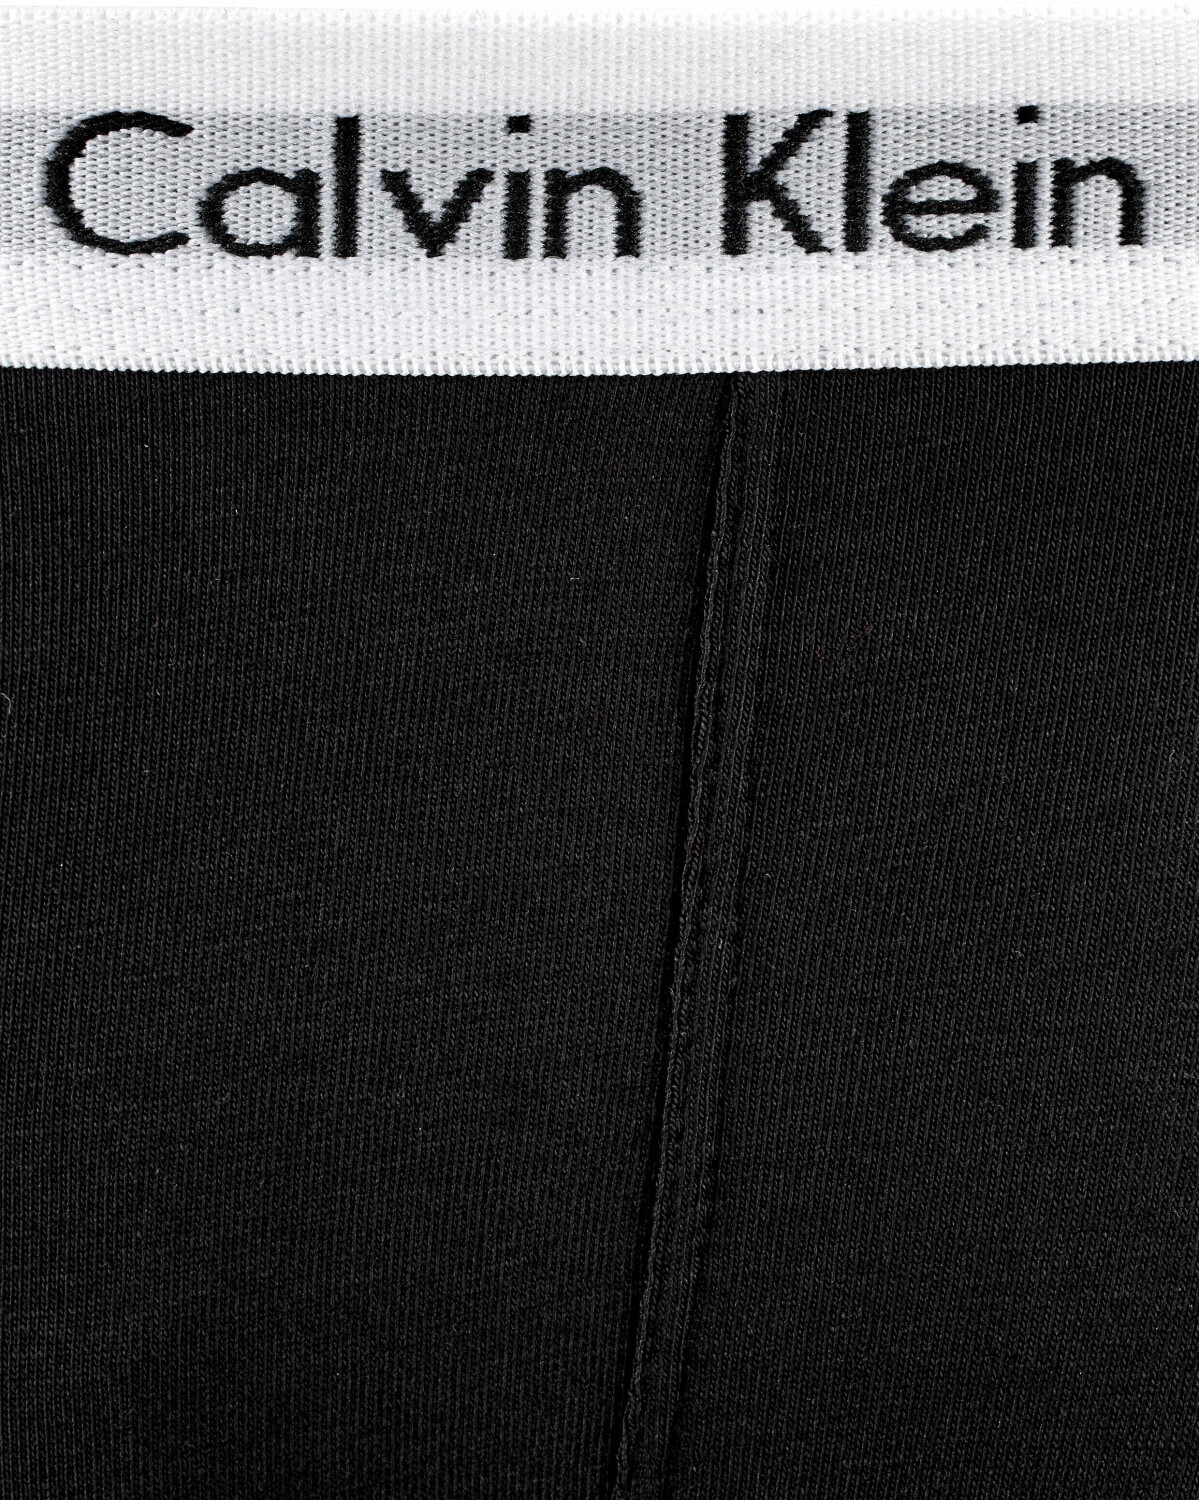 Calvin Klein 2-Pack Boxershorts black (B70B792000-001) ab 28,90 € |  Preisvergleich bei